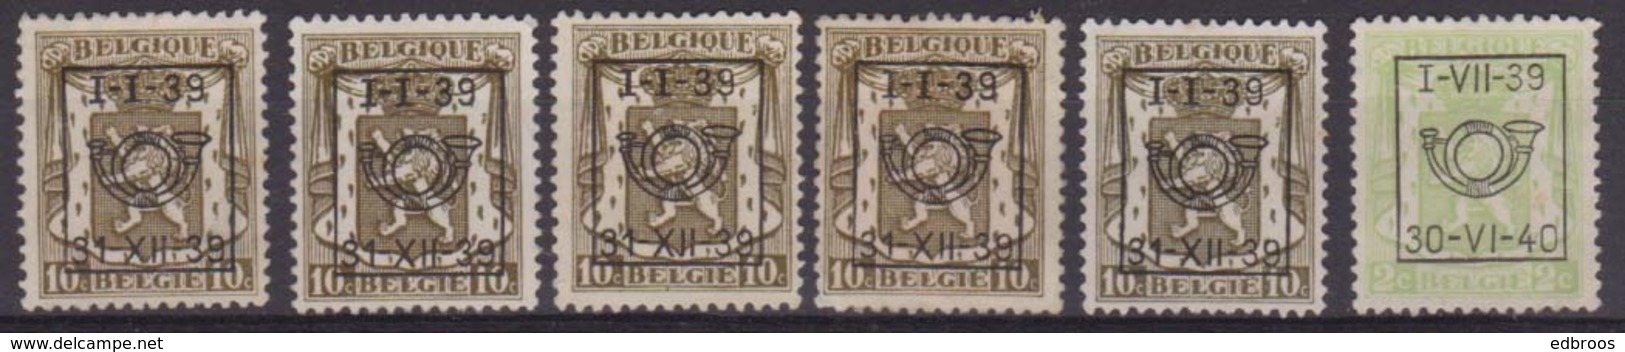 België/Belgique  Preo Typo 5x N° 421 + N° 428. - Typo Precancels 1936-51 (Small Seal Of The State)